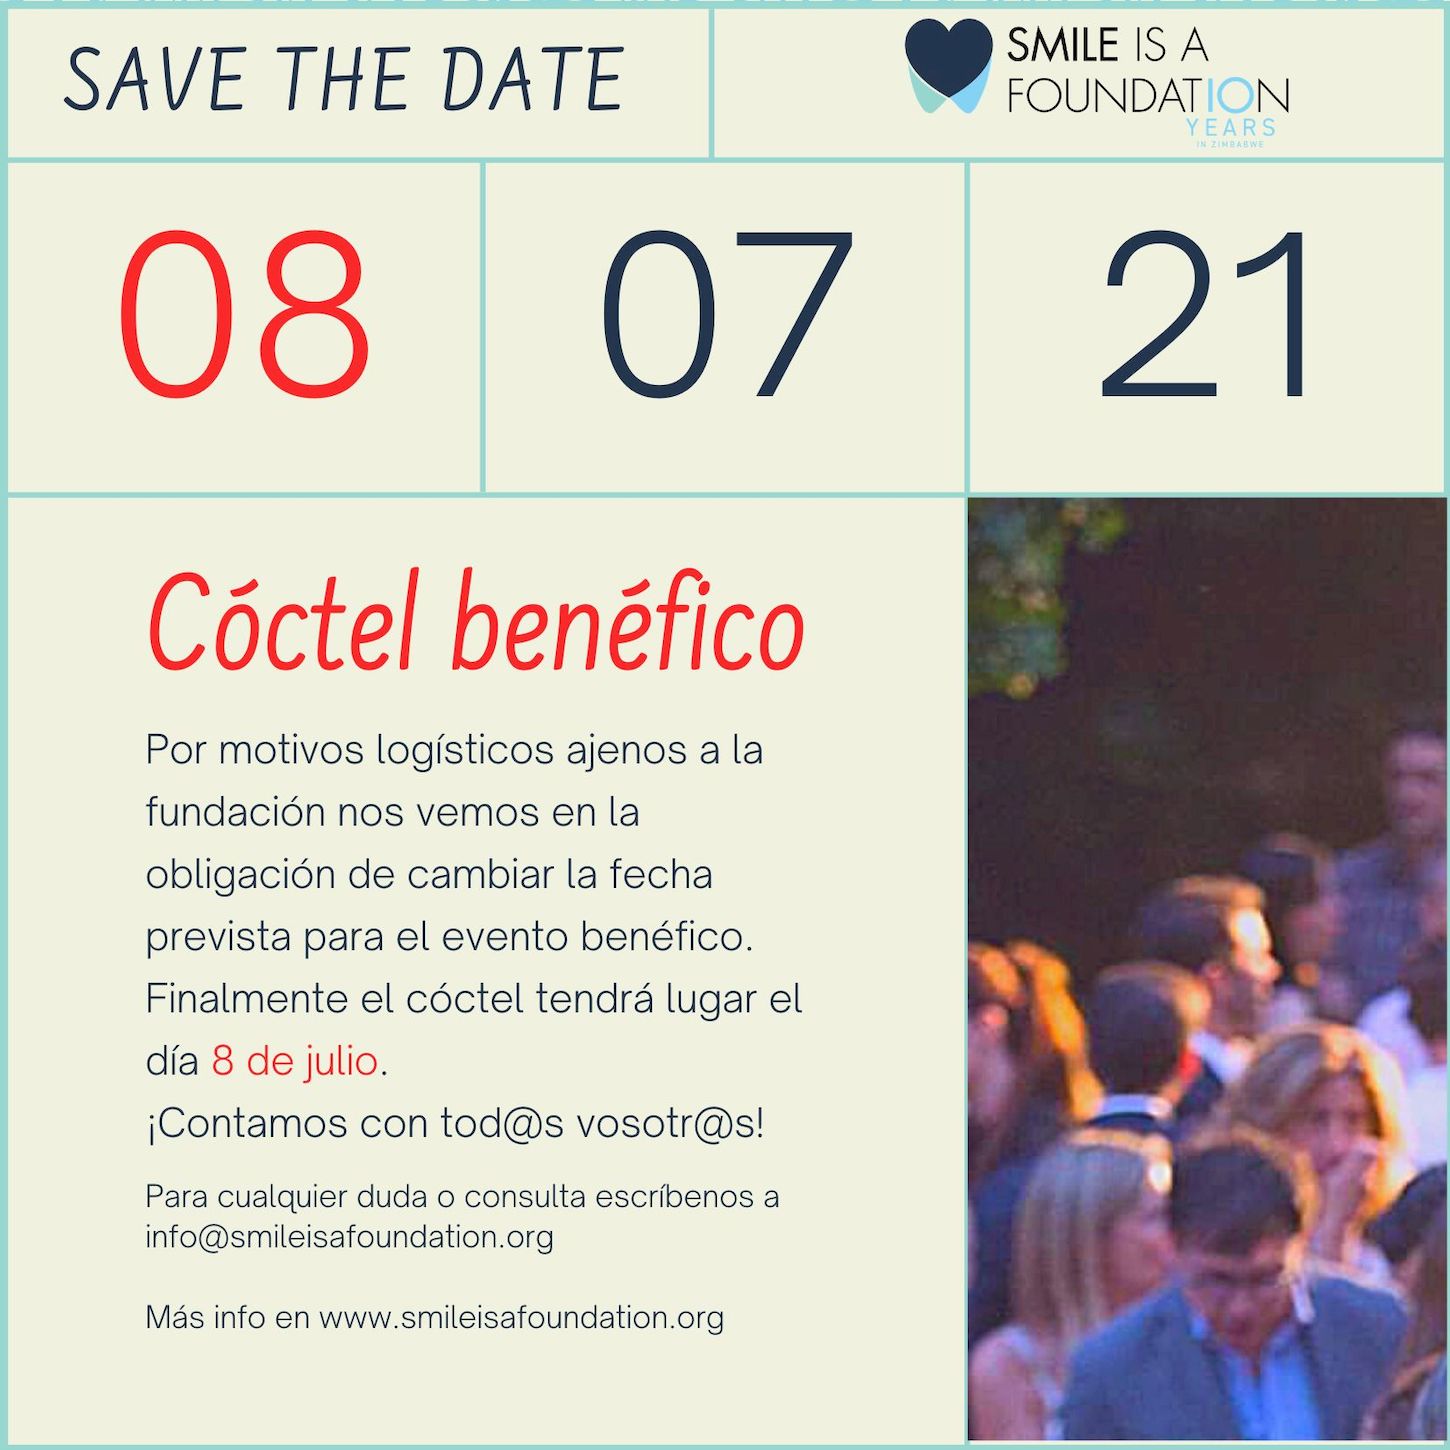 Save The Date 8 de julio de 2021 cóctel benéfico de Smile is a Foundation